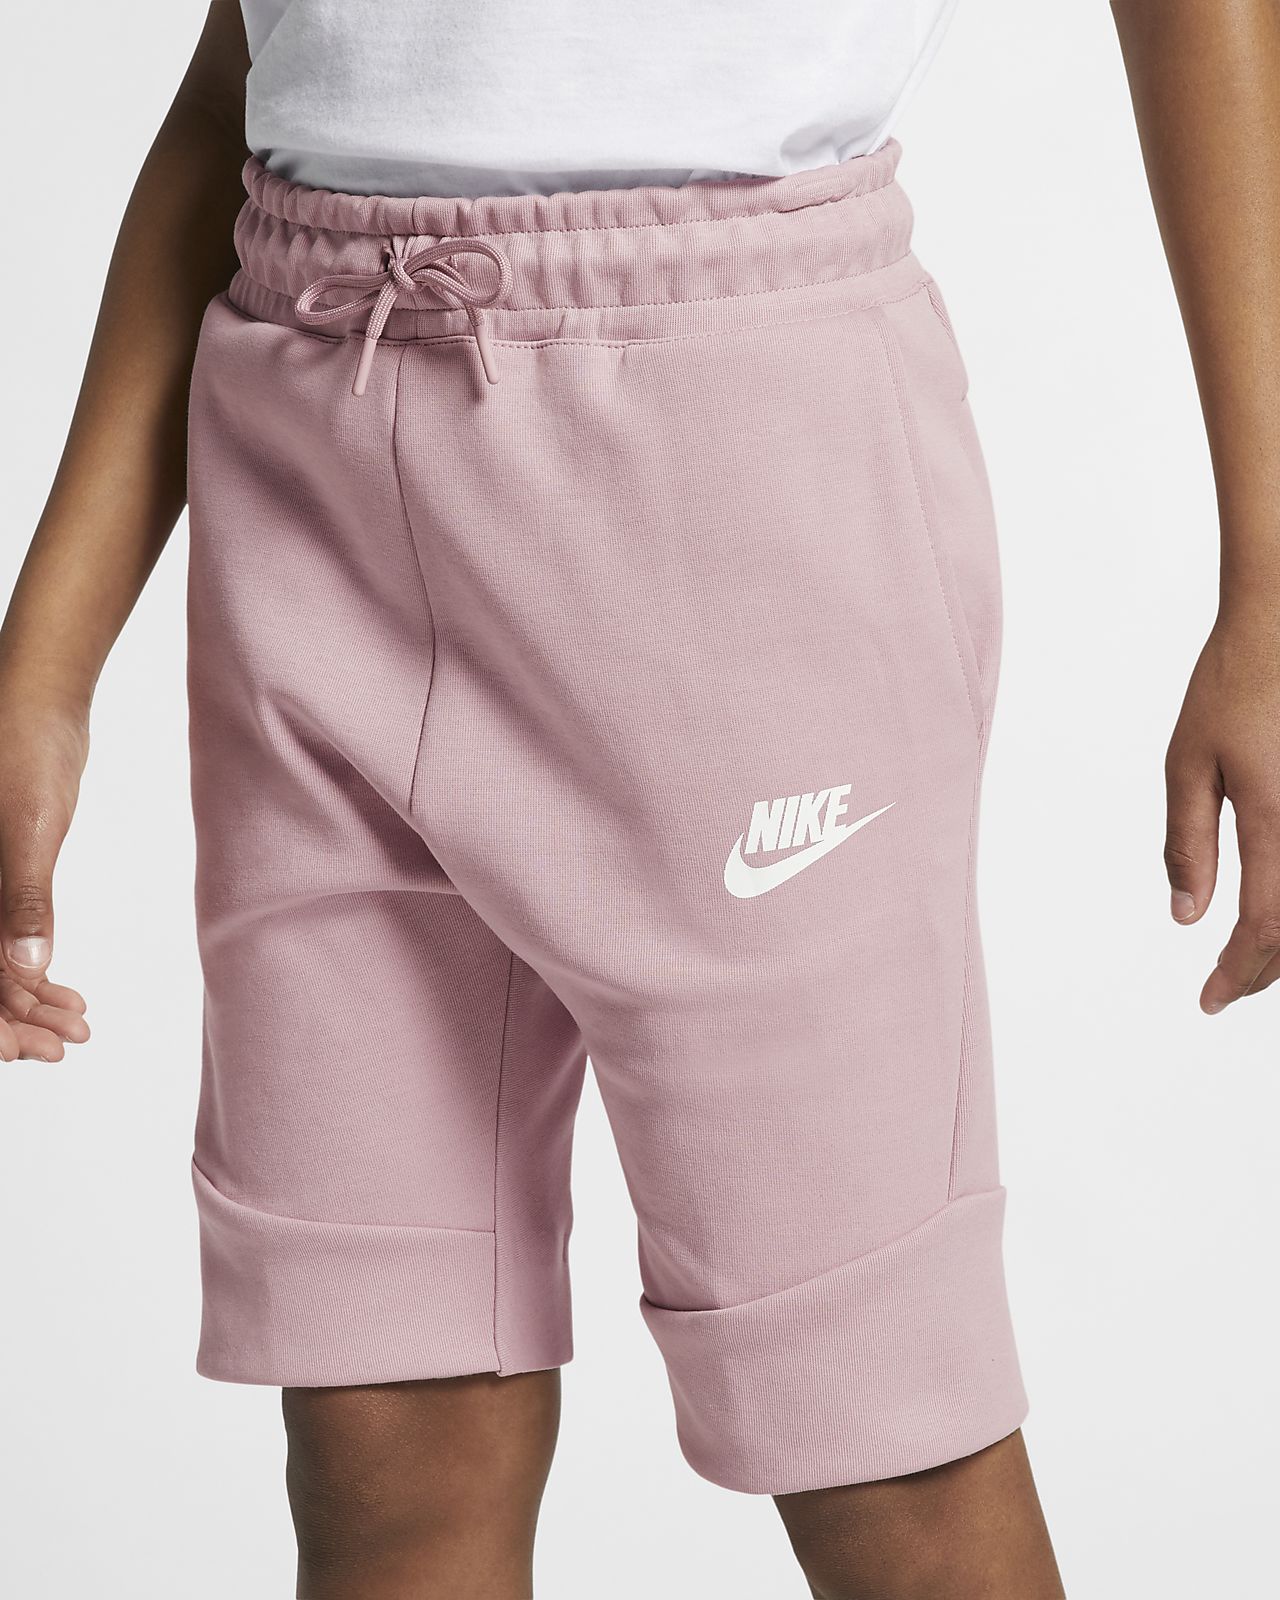 light pink nike shorts